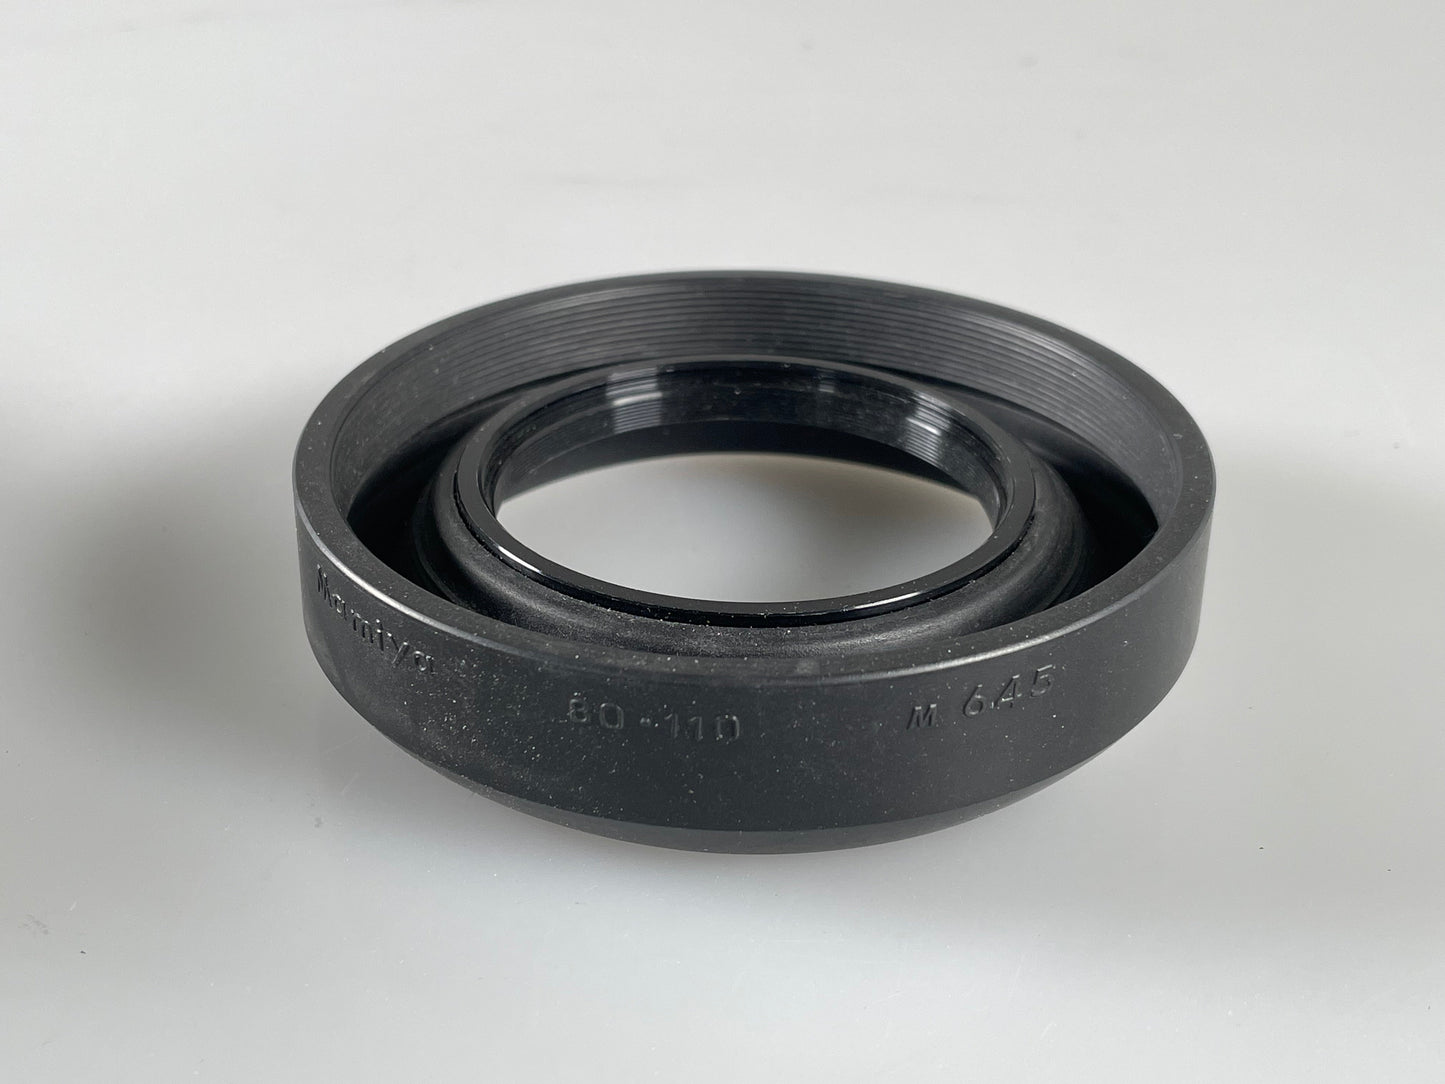 Mamiya M645 80-110mm Lens hood rubber